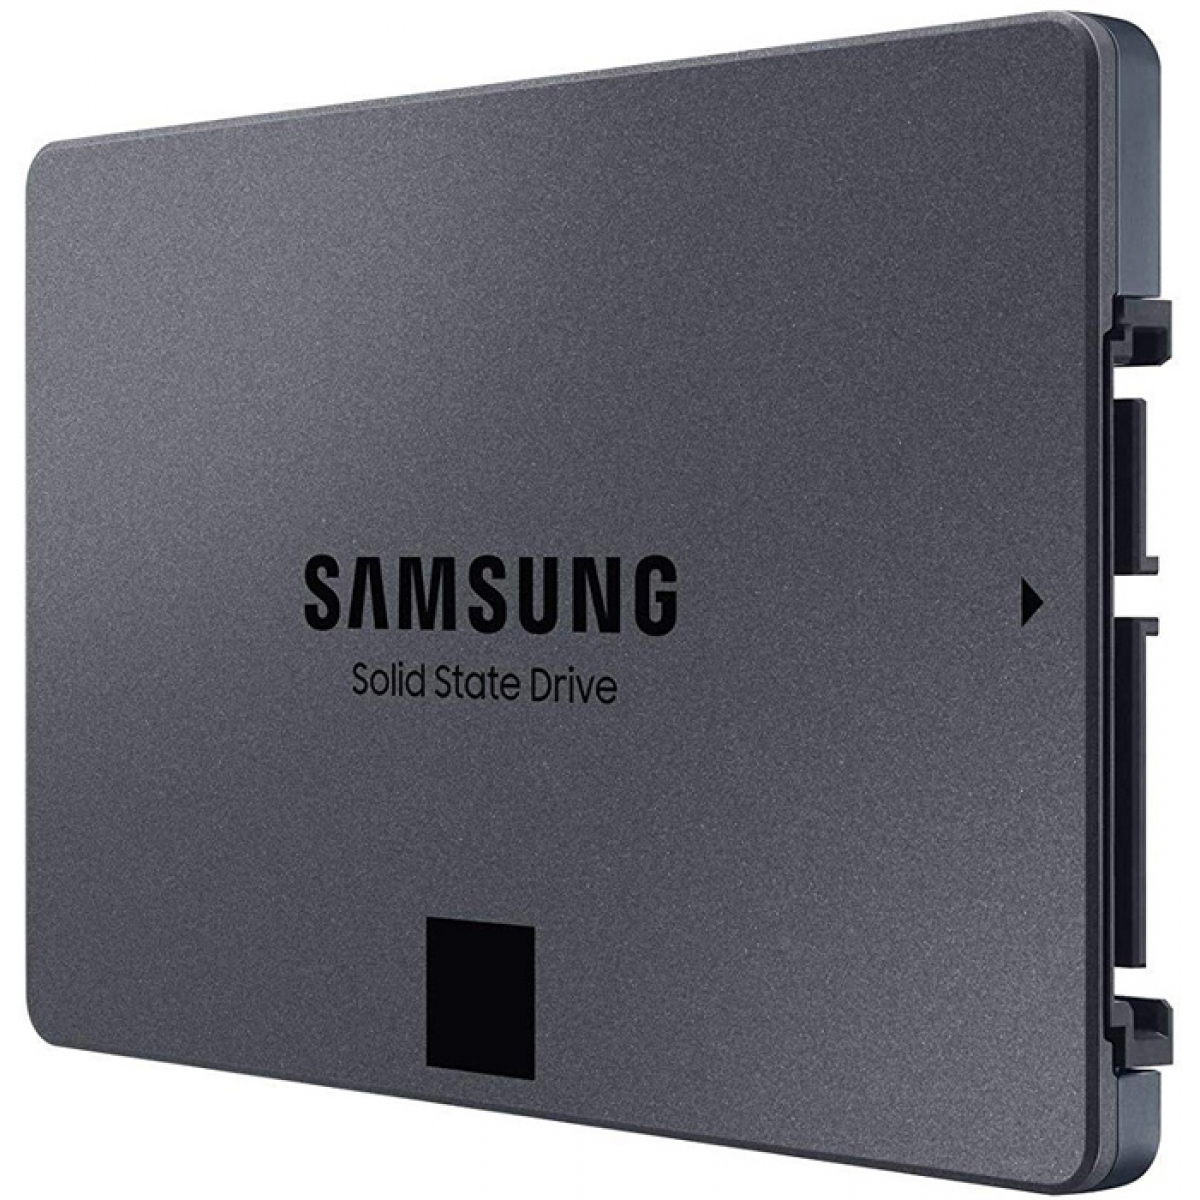 SSD Samsung 860 QVO, 2TB, Sata III, Leitura 550MBs e Gravação 520MBs, MZ-76Q2T0B-AM